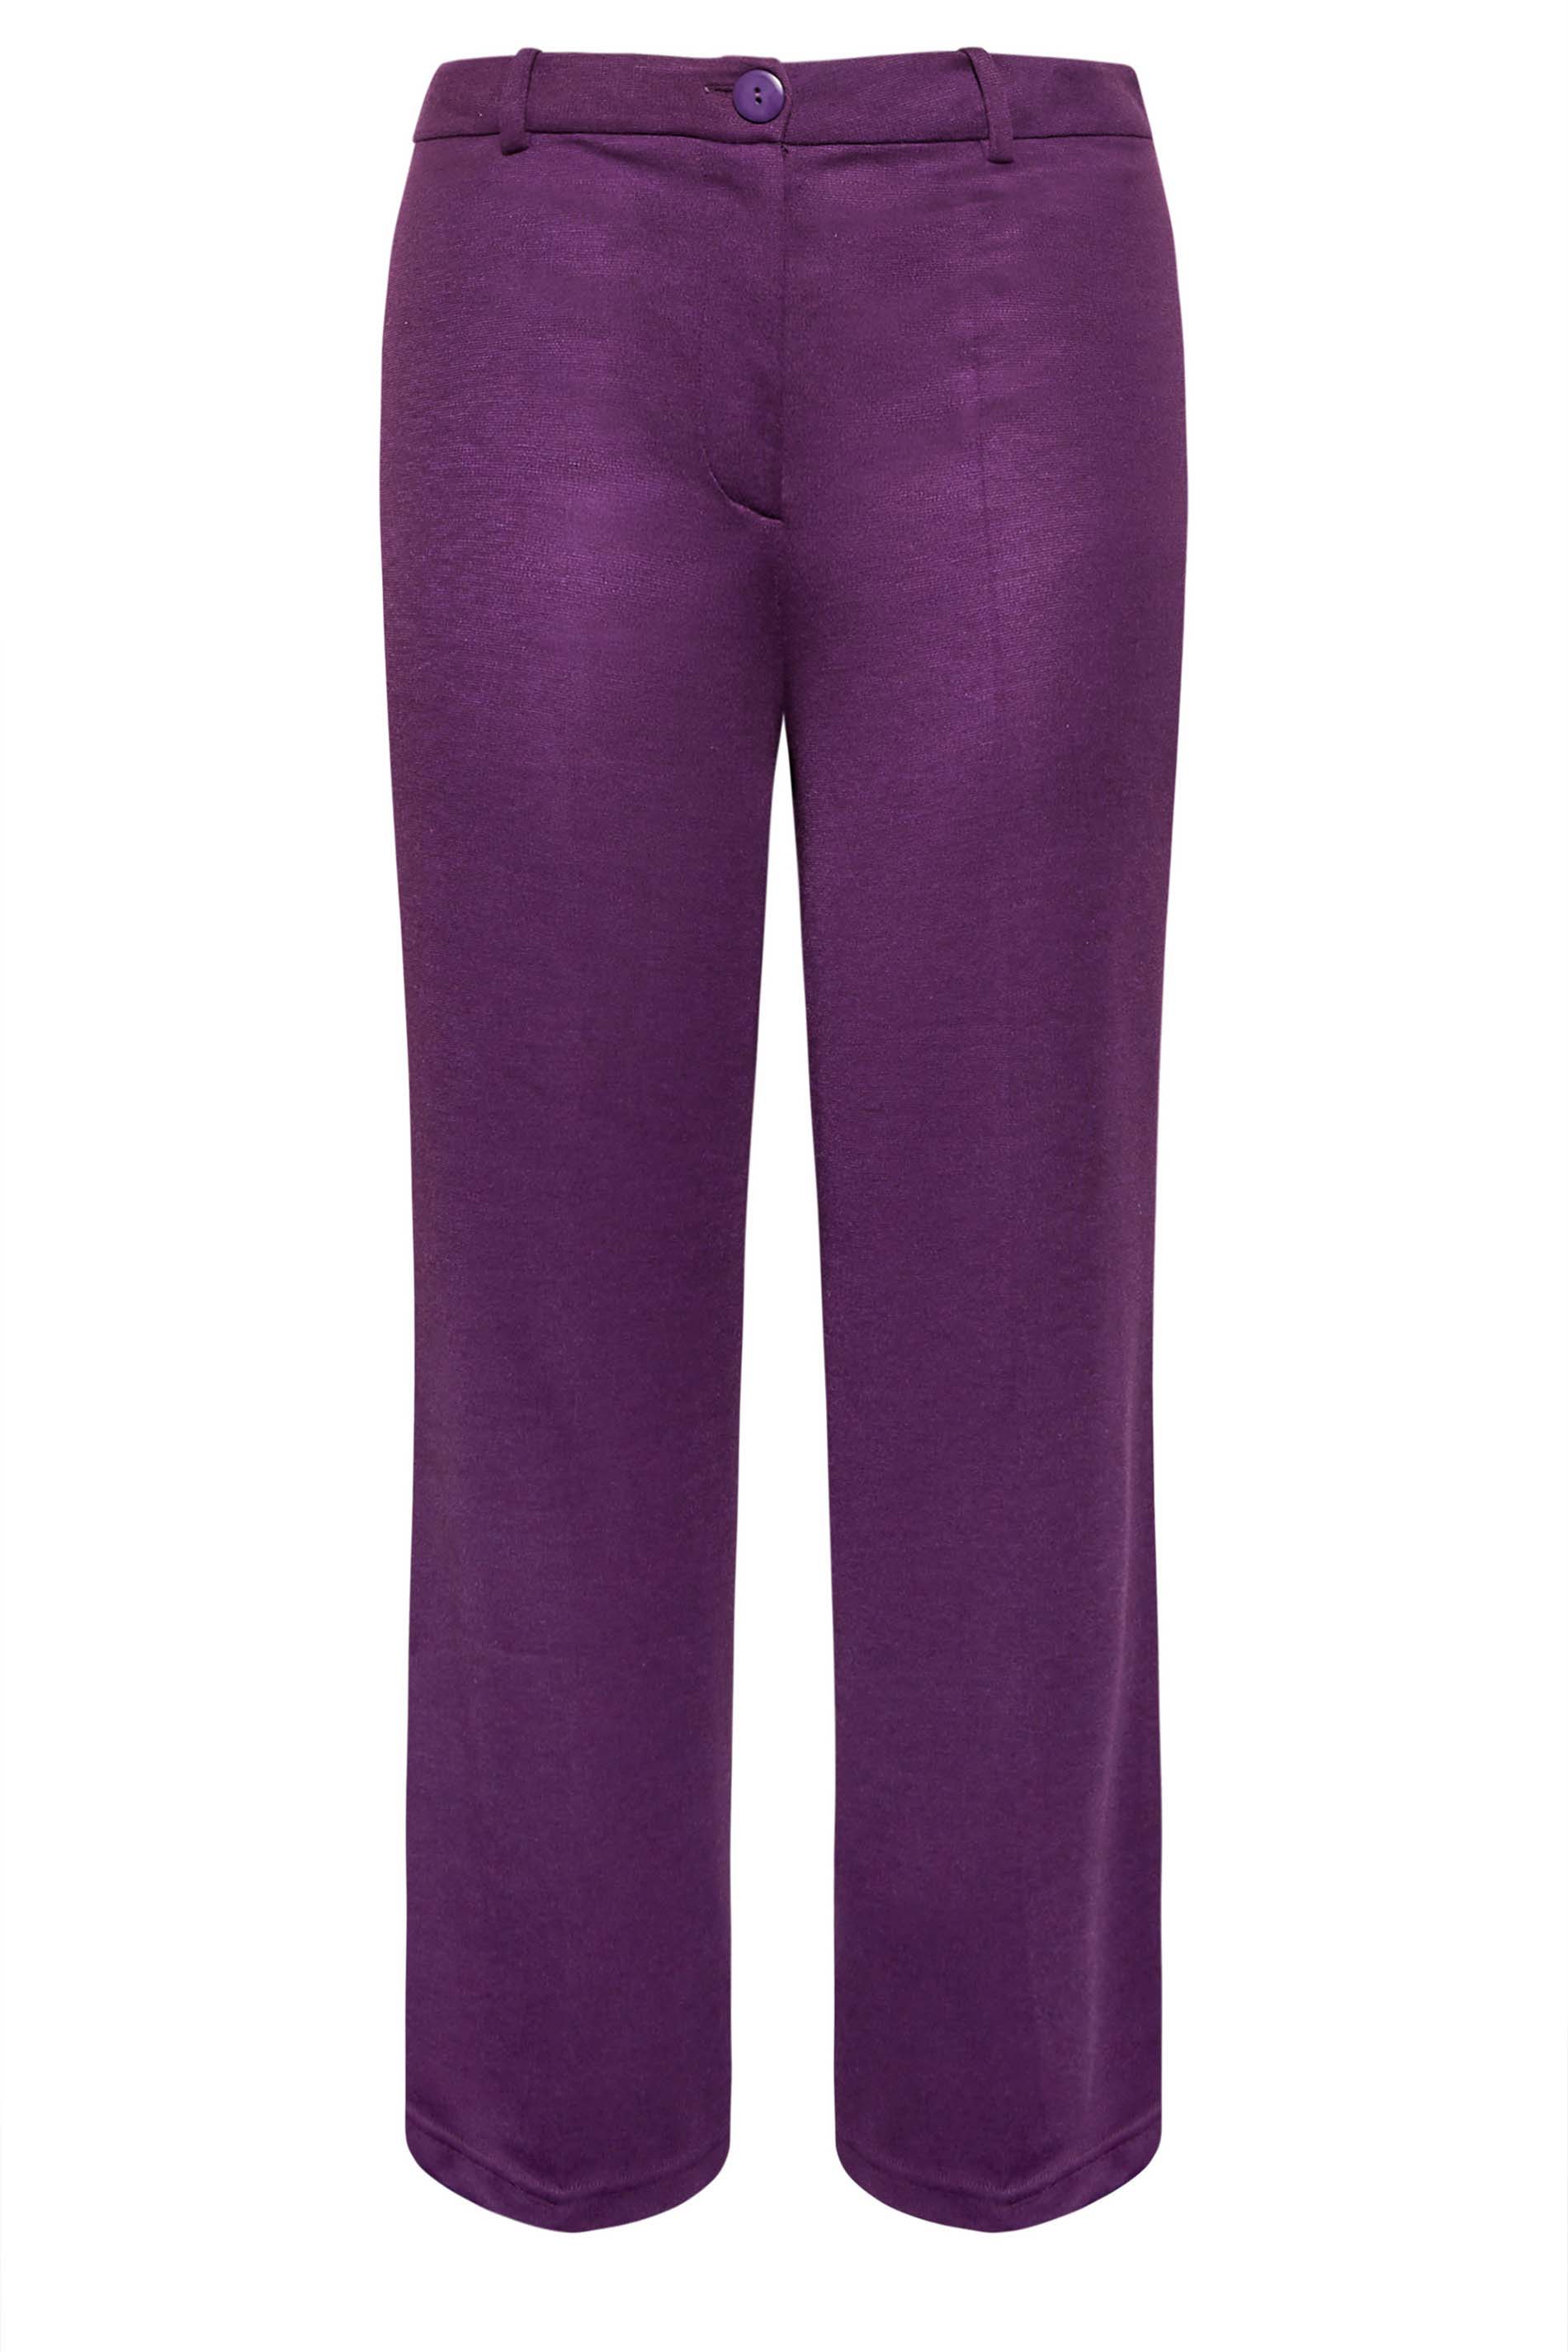 Olyvenn Fashion Summer Casual Women Solid Span Ladies High Waist Full  Length Long Pants Wide Leg Trousers Yoga Pants Full Pants Female Fashion  Purple 8 - Walmart.com